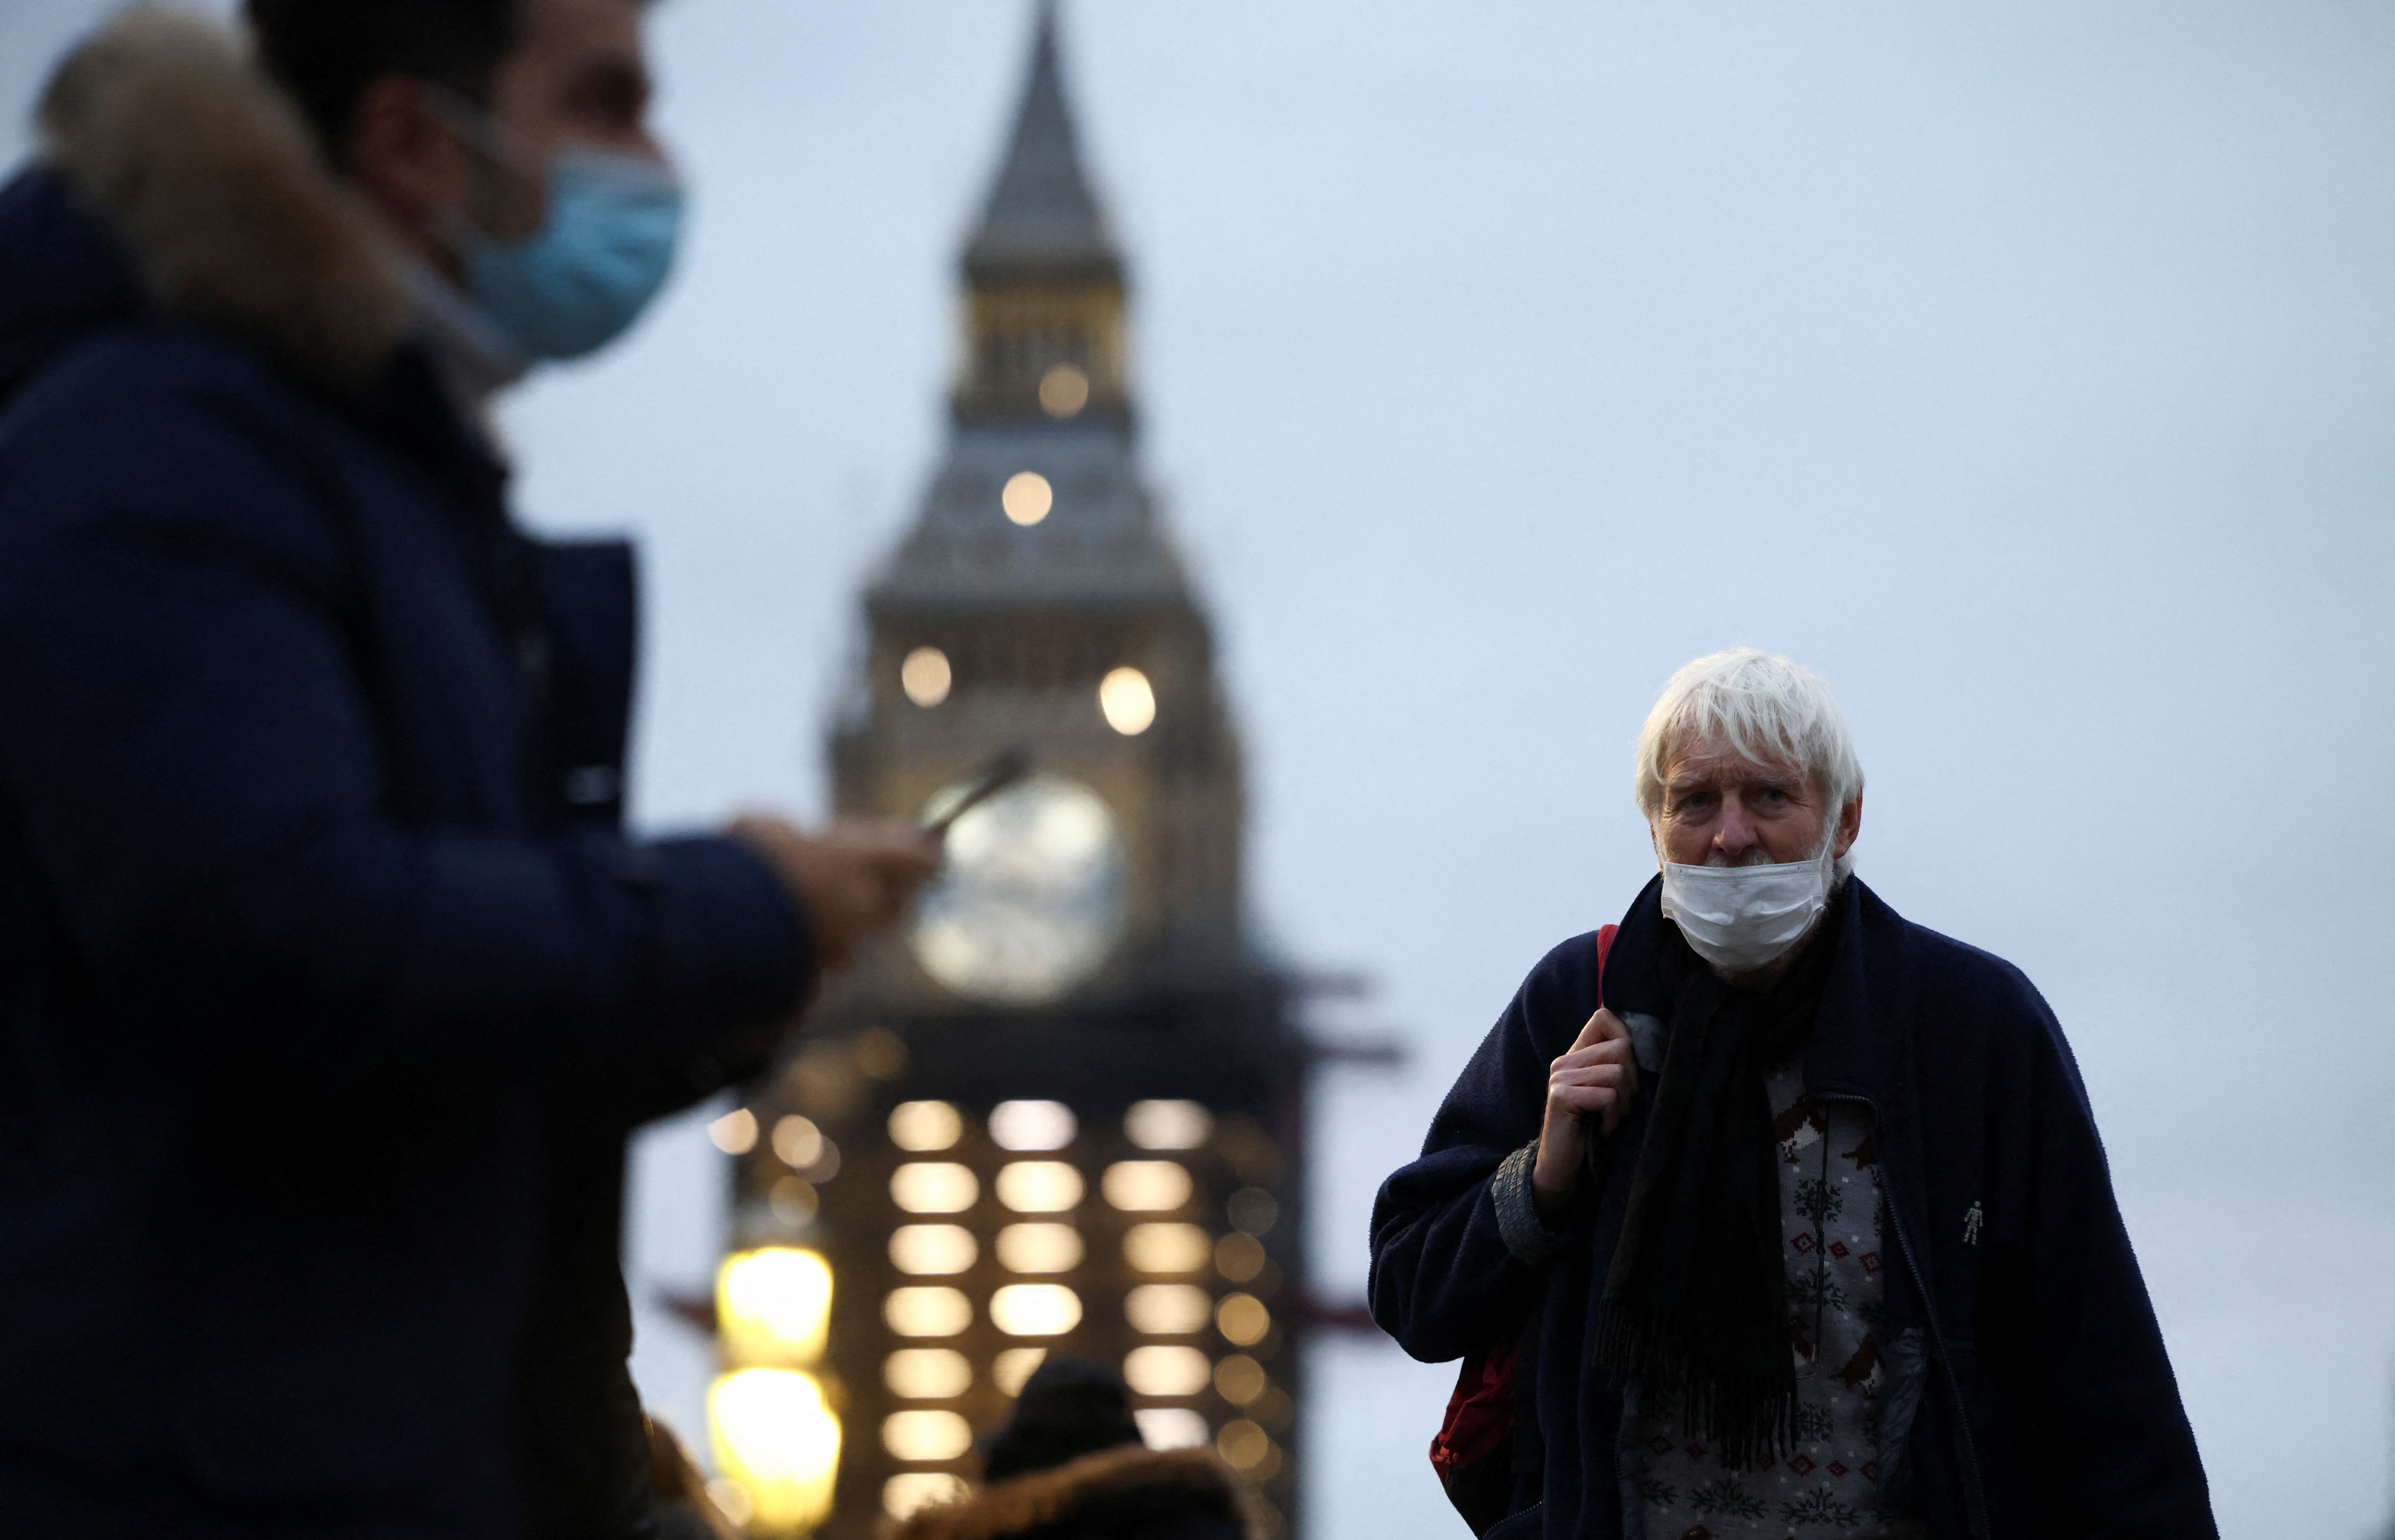 Peatones en Londres (Reuters)